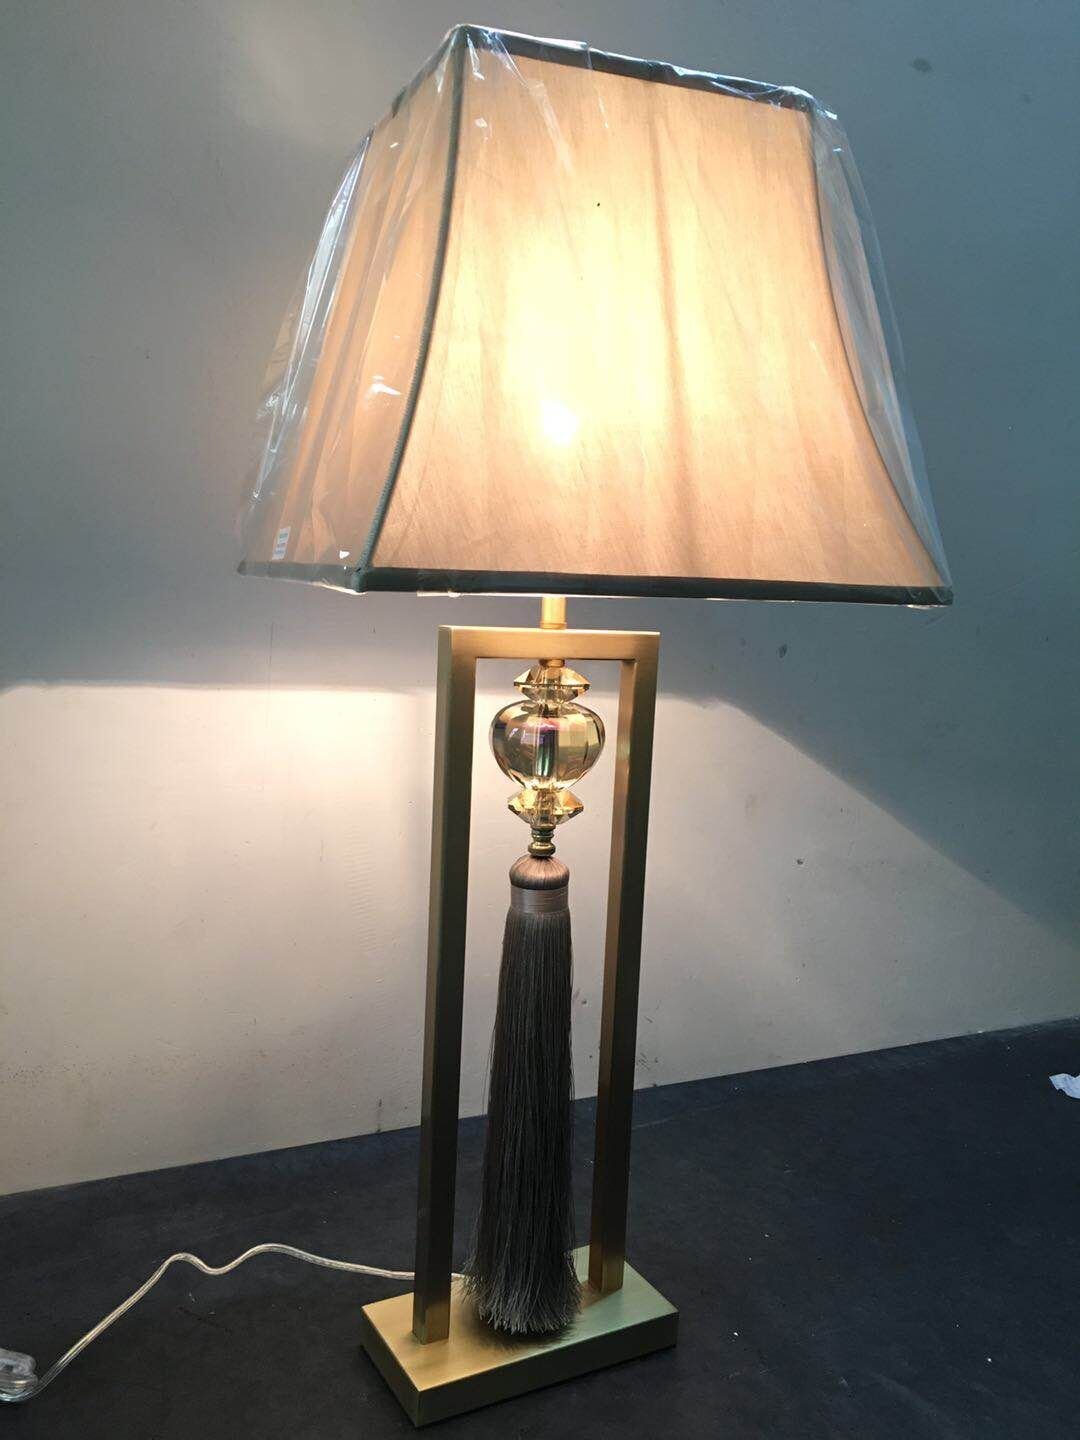  Hotel guestroom decorative crystal tassels table lamp ( KA170418)